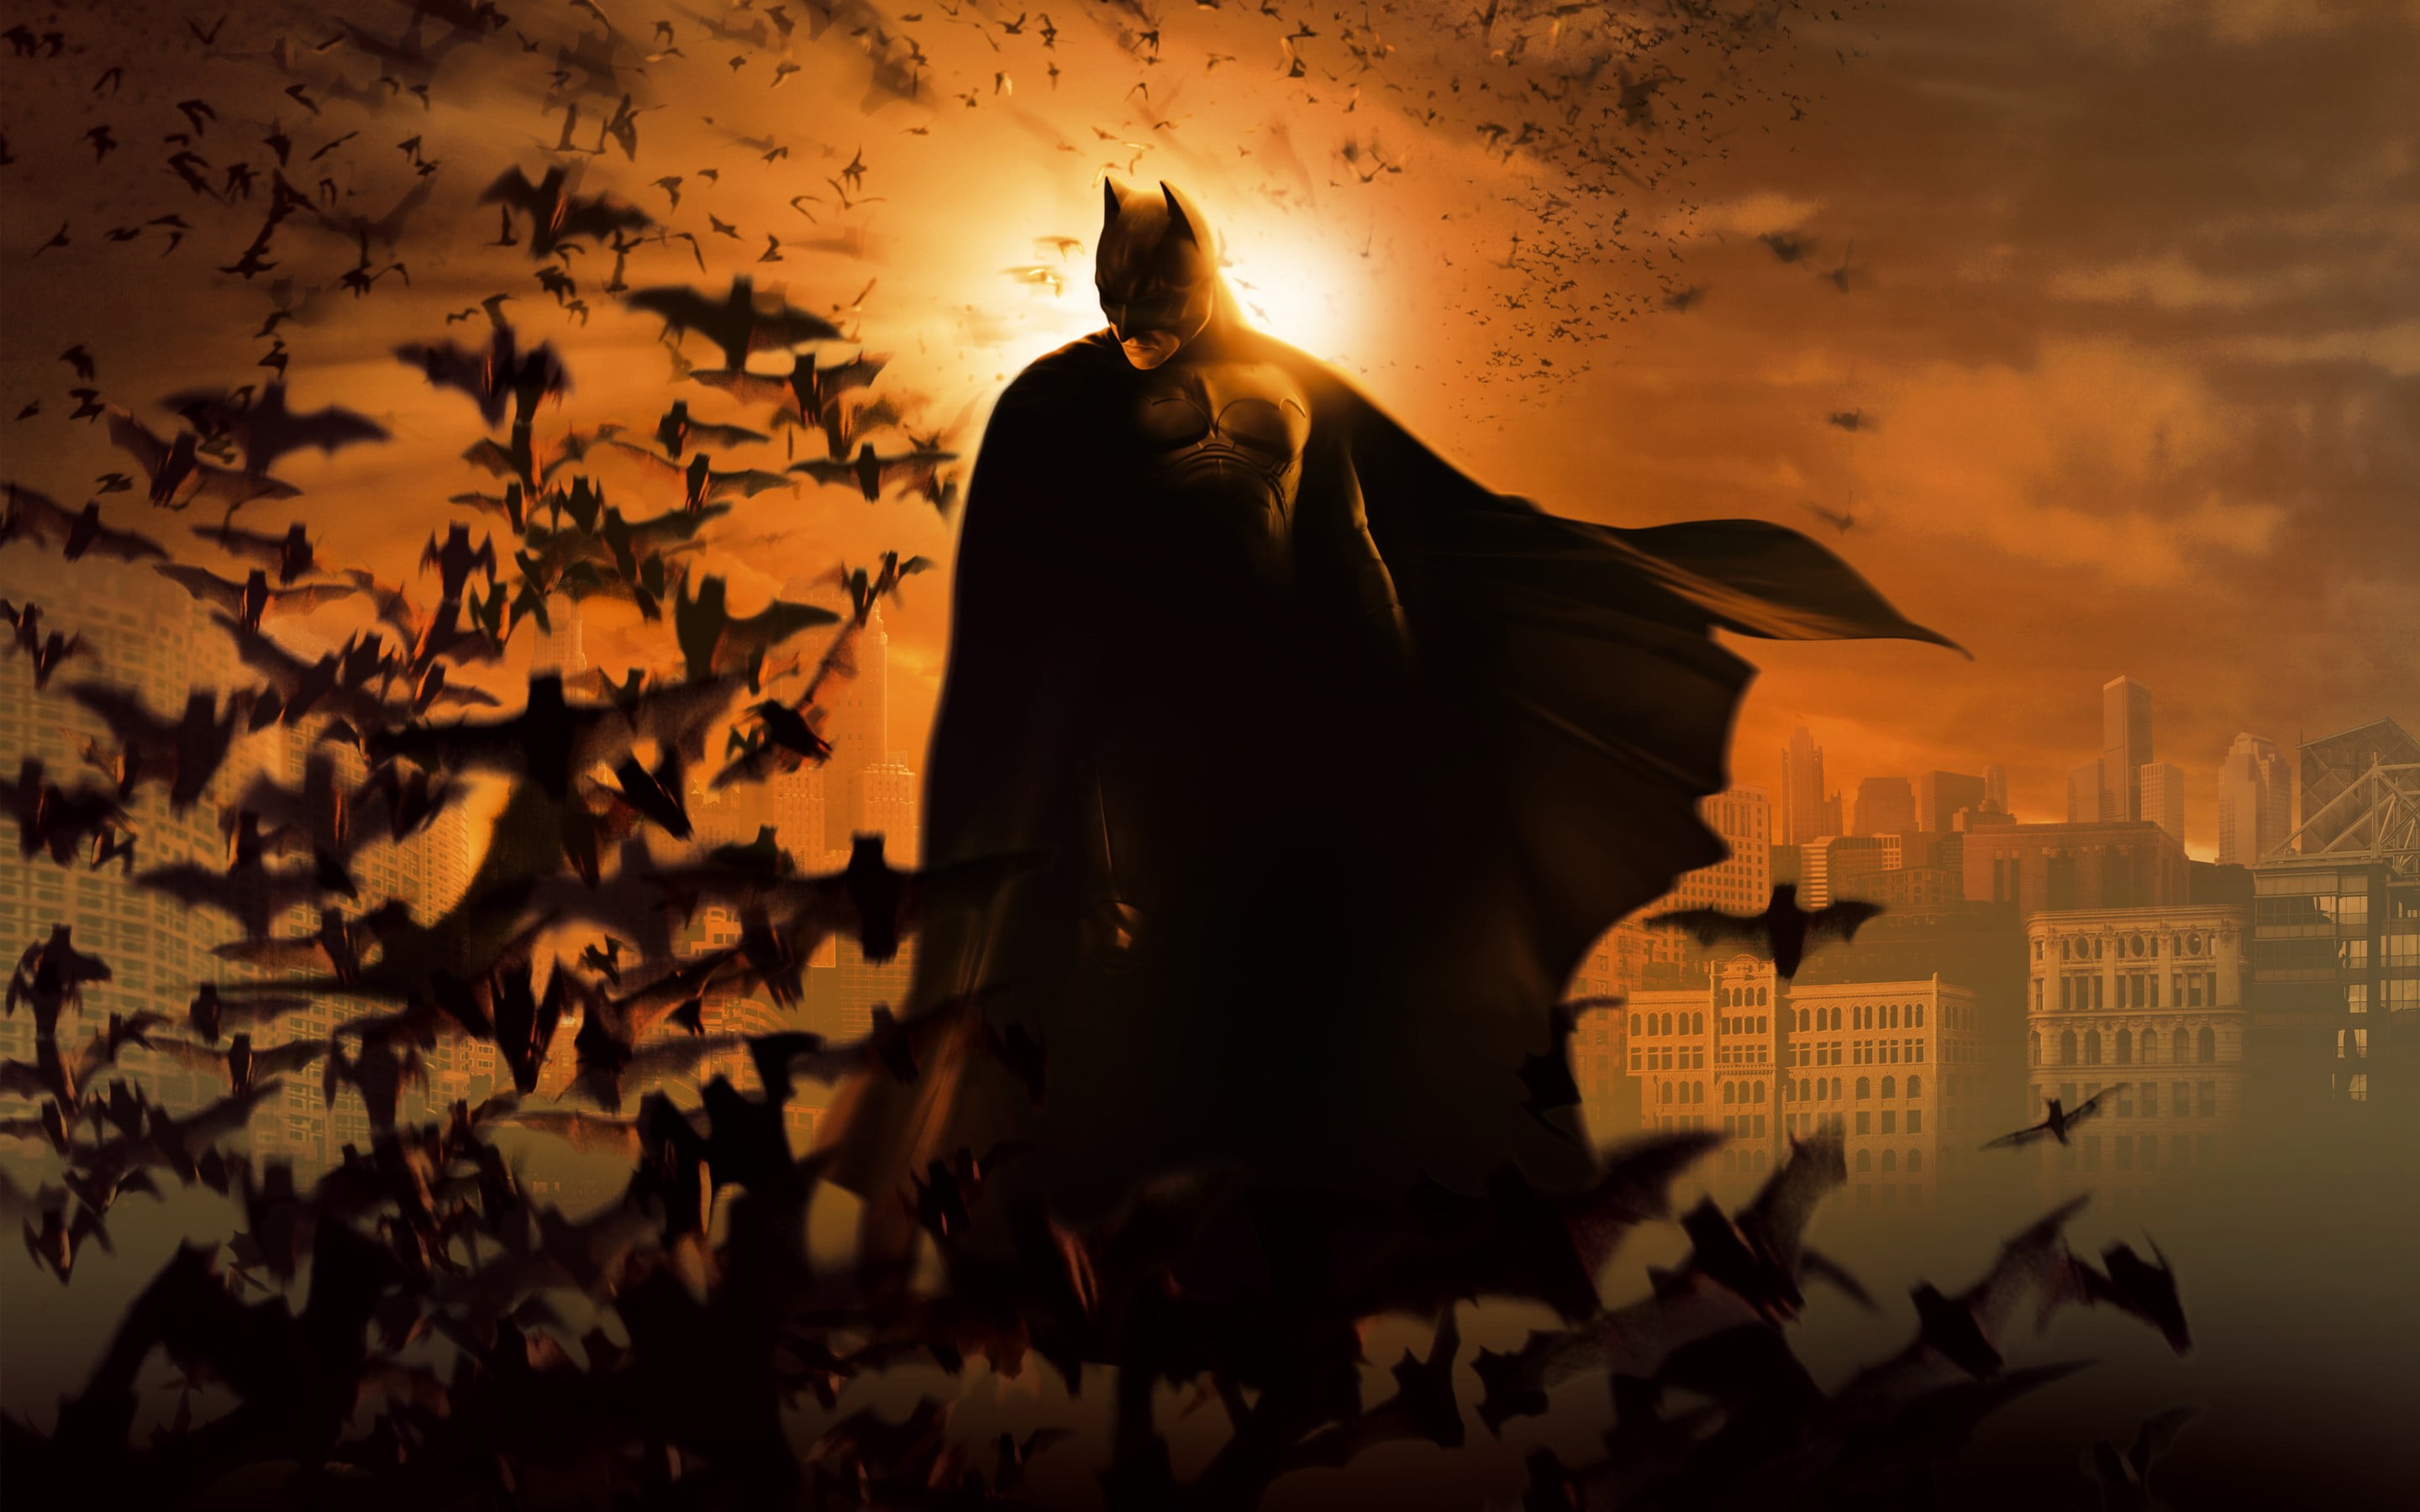 Batman wallpaper, bats, city, Batman Begins, movies, sky, sunset